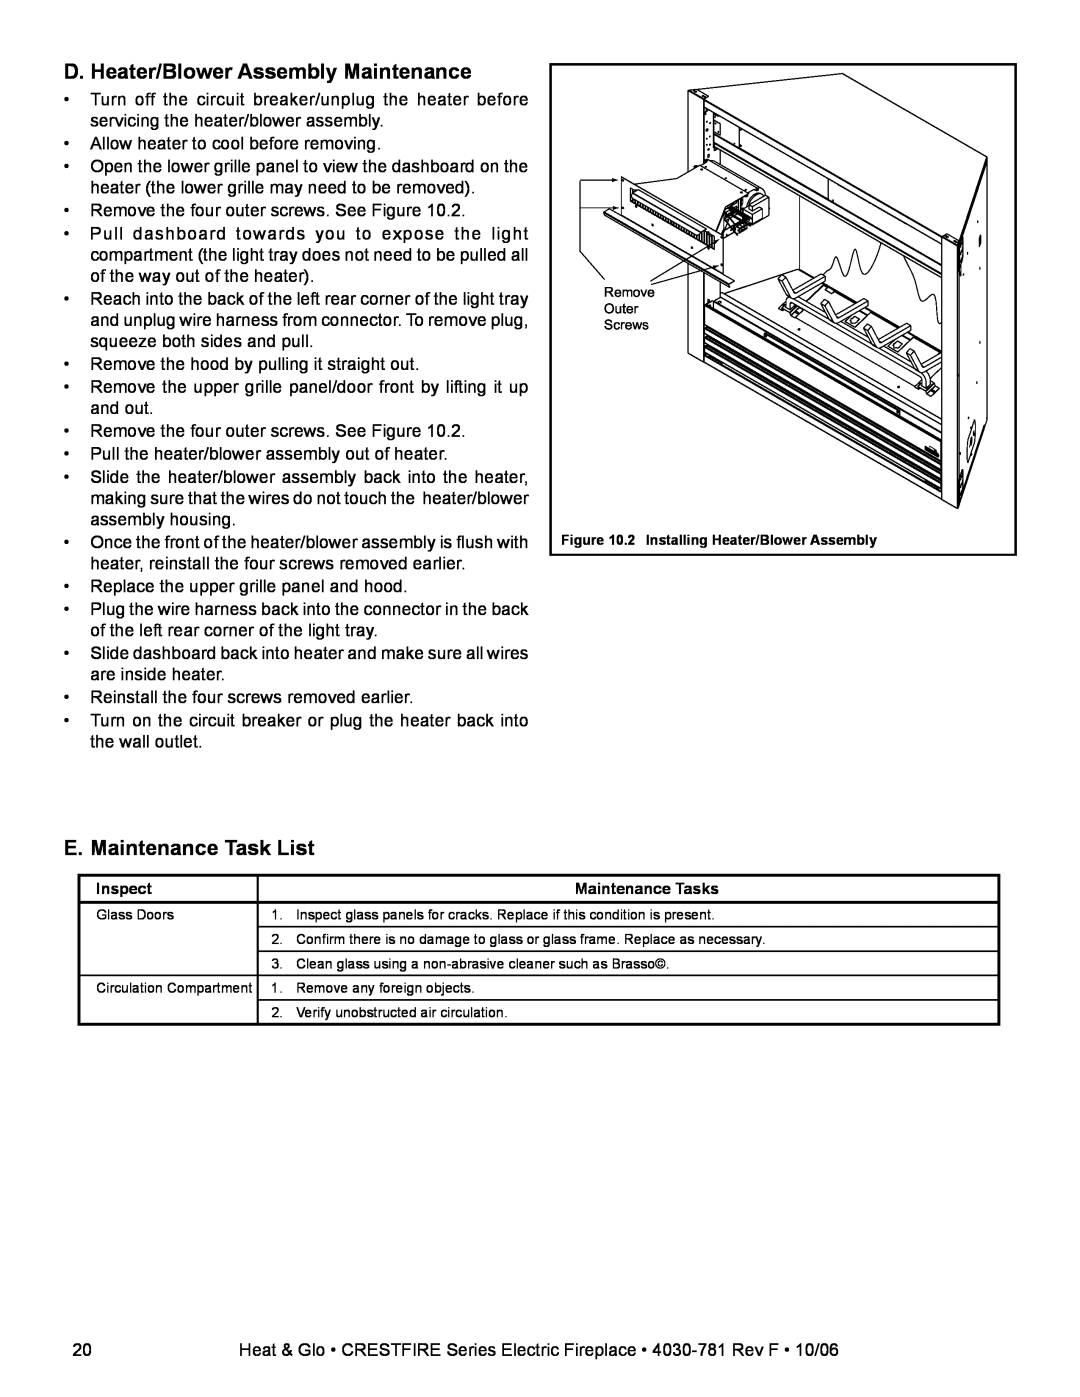 Heat & Glo LifeStyle CF550E-B owner manual D. Heater/Blower Assembly Maintenance, E. Maintenance Task List 